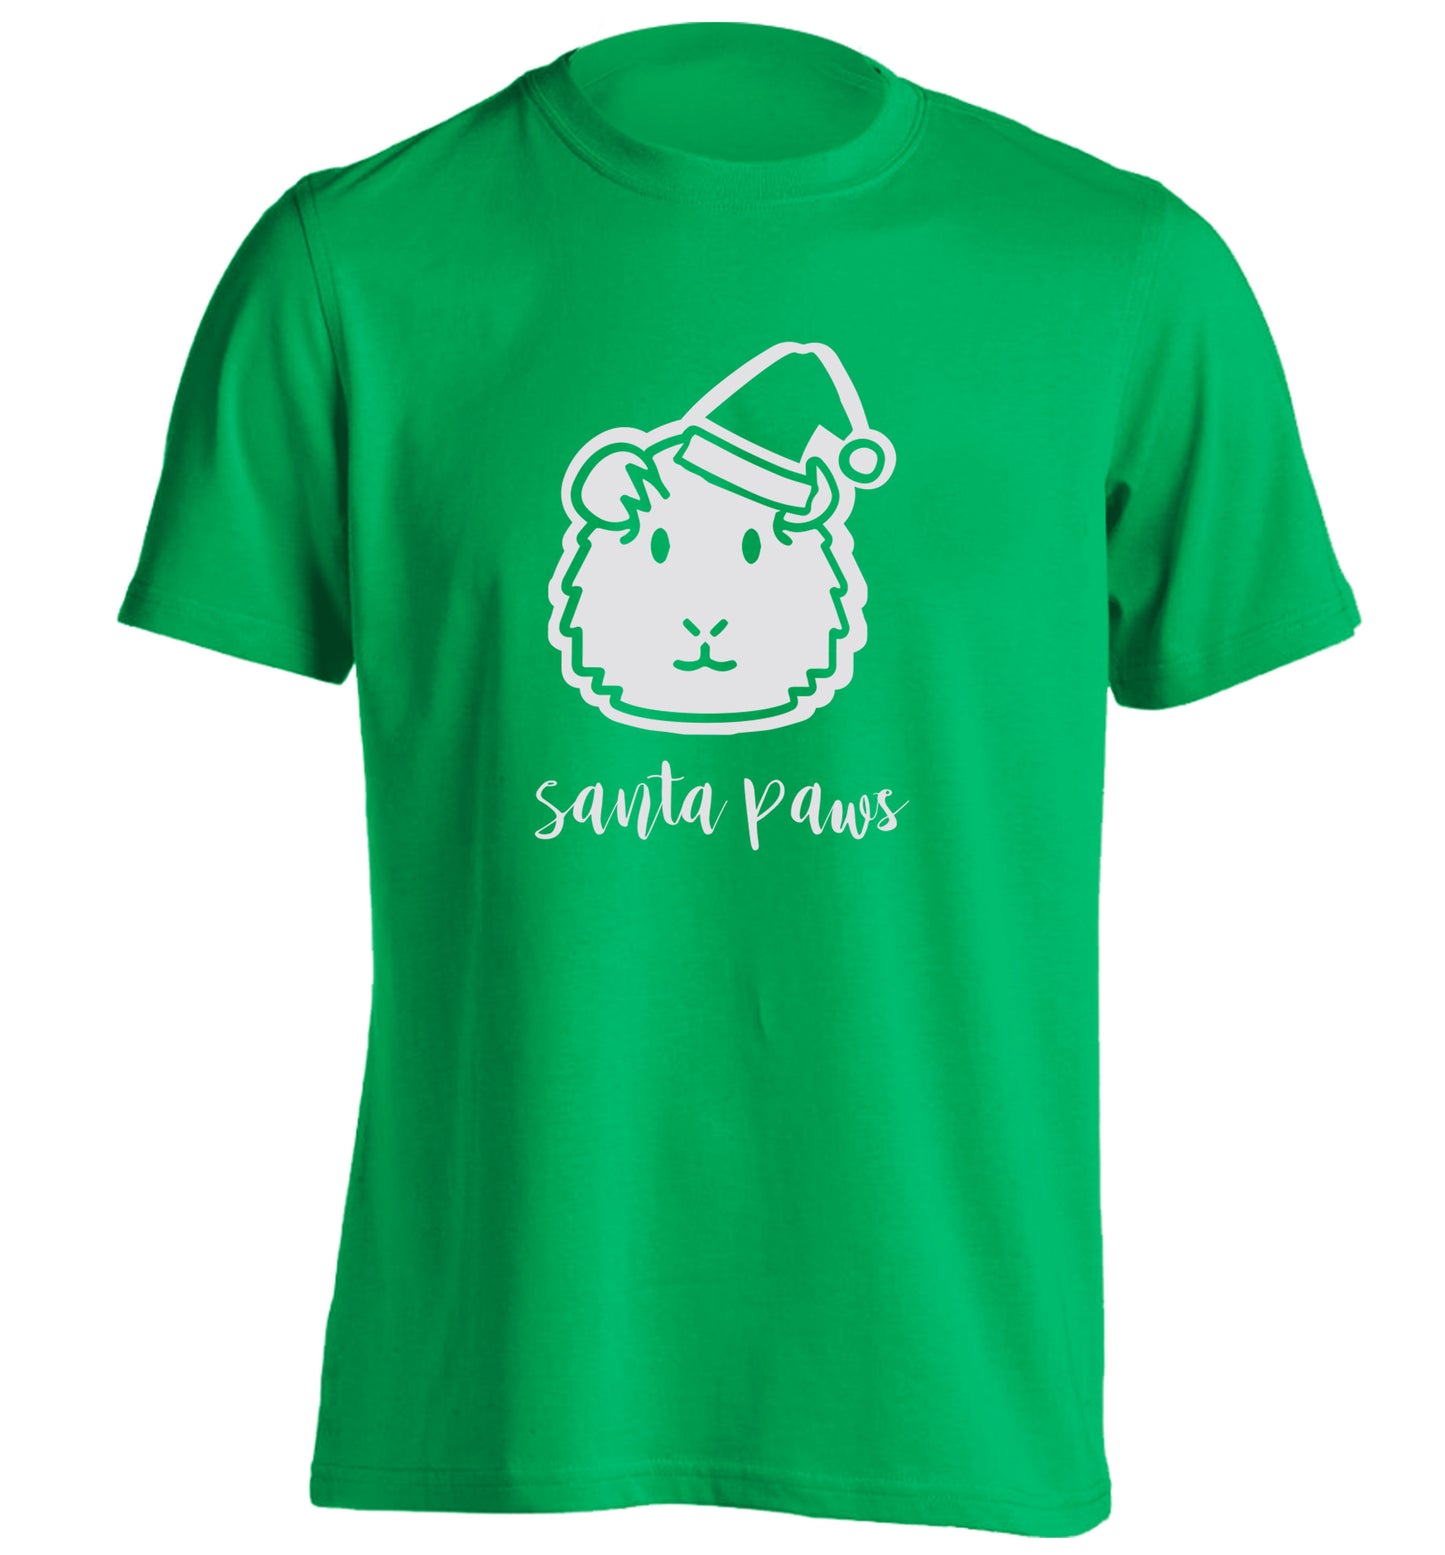 Guinea pig Santa Paws adults unisex green Tshirt 2XL